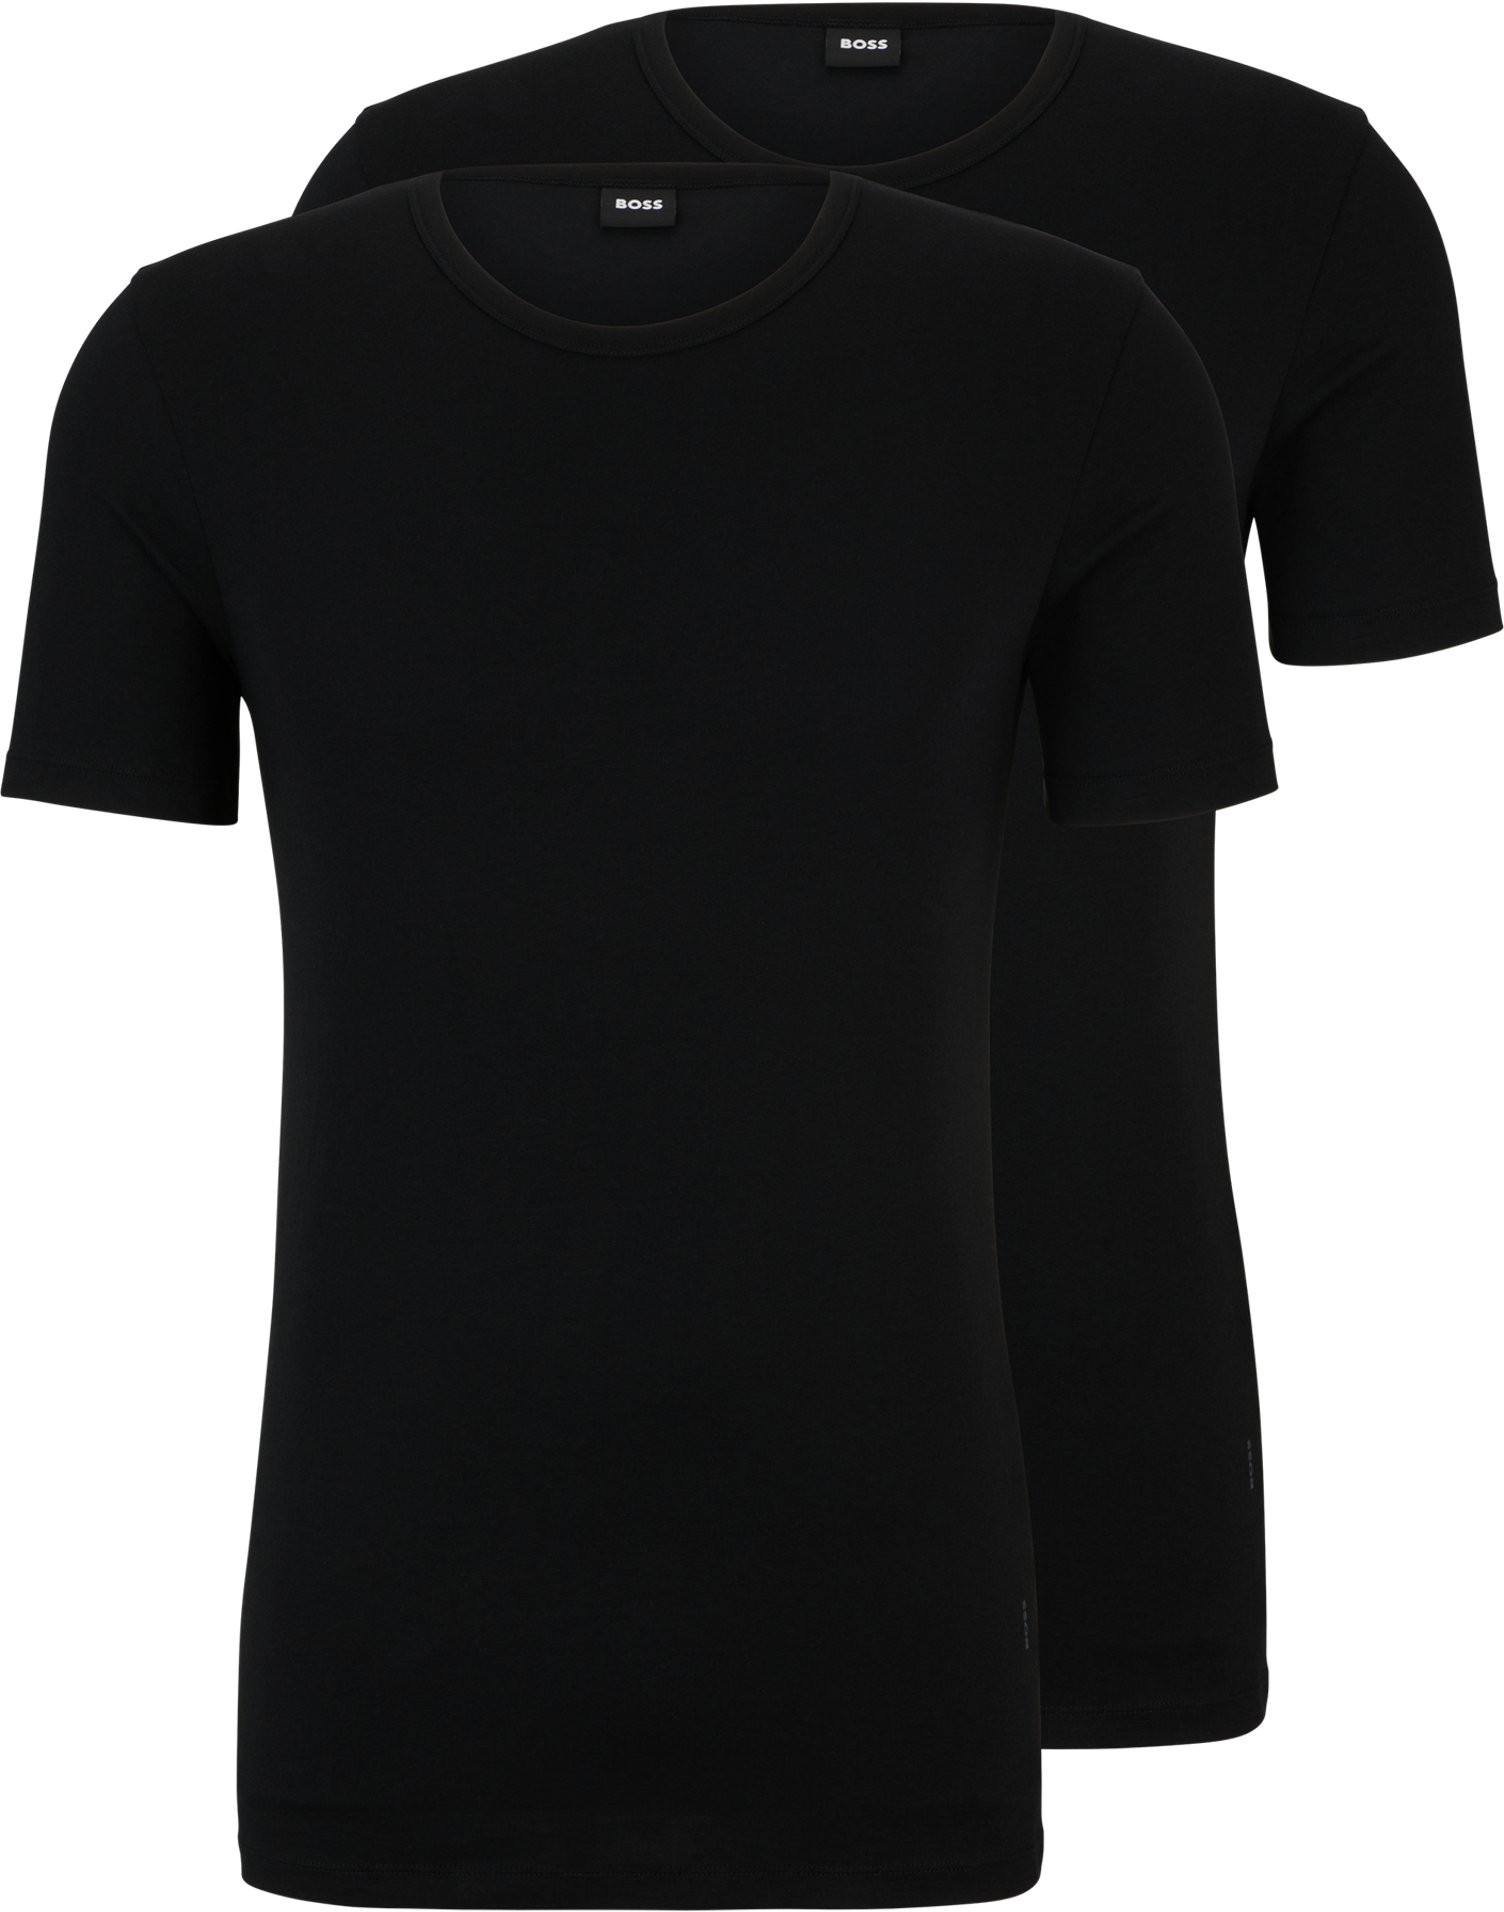 Hugo Boss 2 PACK - pánske tričko BOSS Slim Fit 50475276-001 XXL